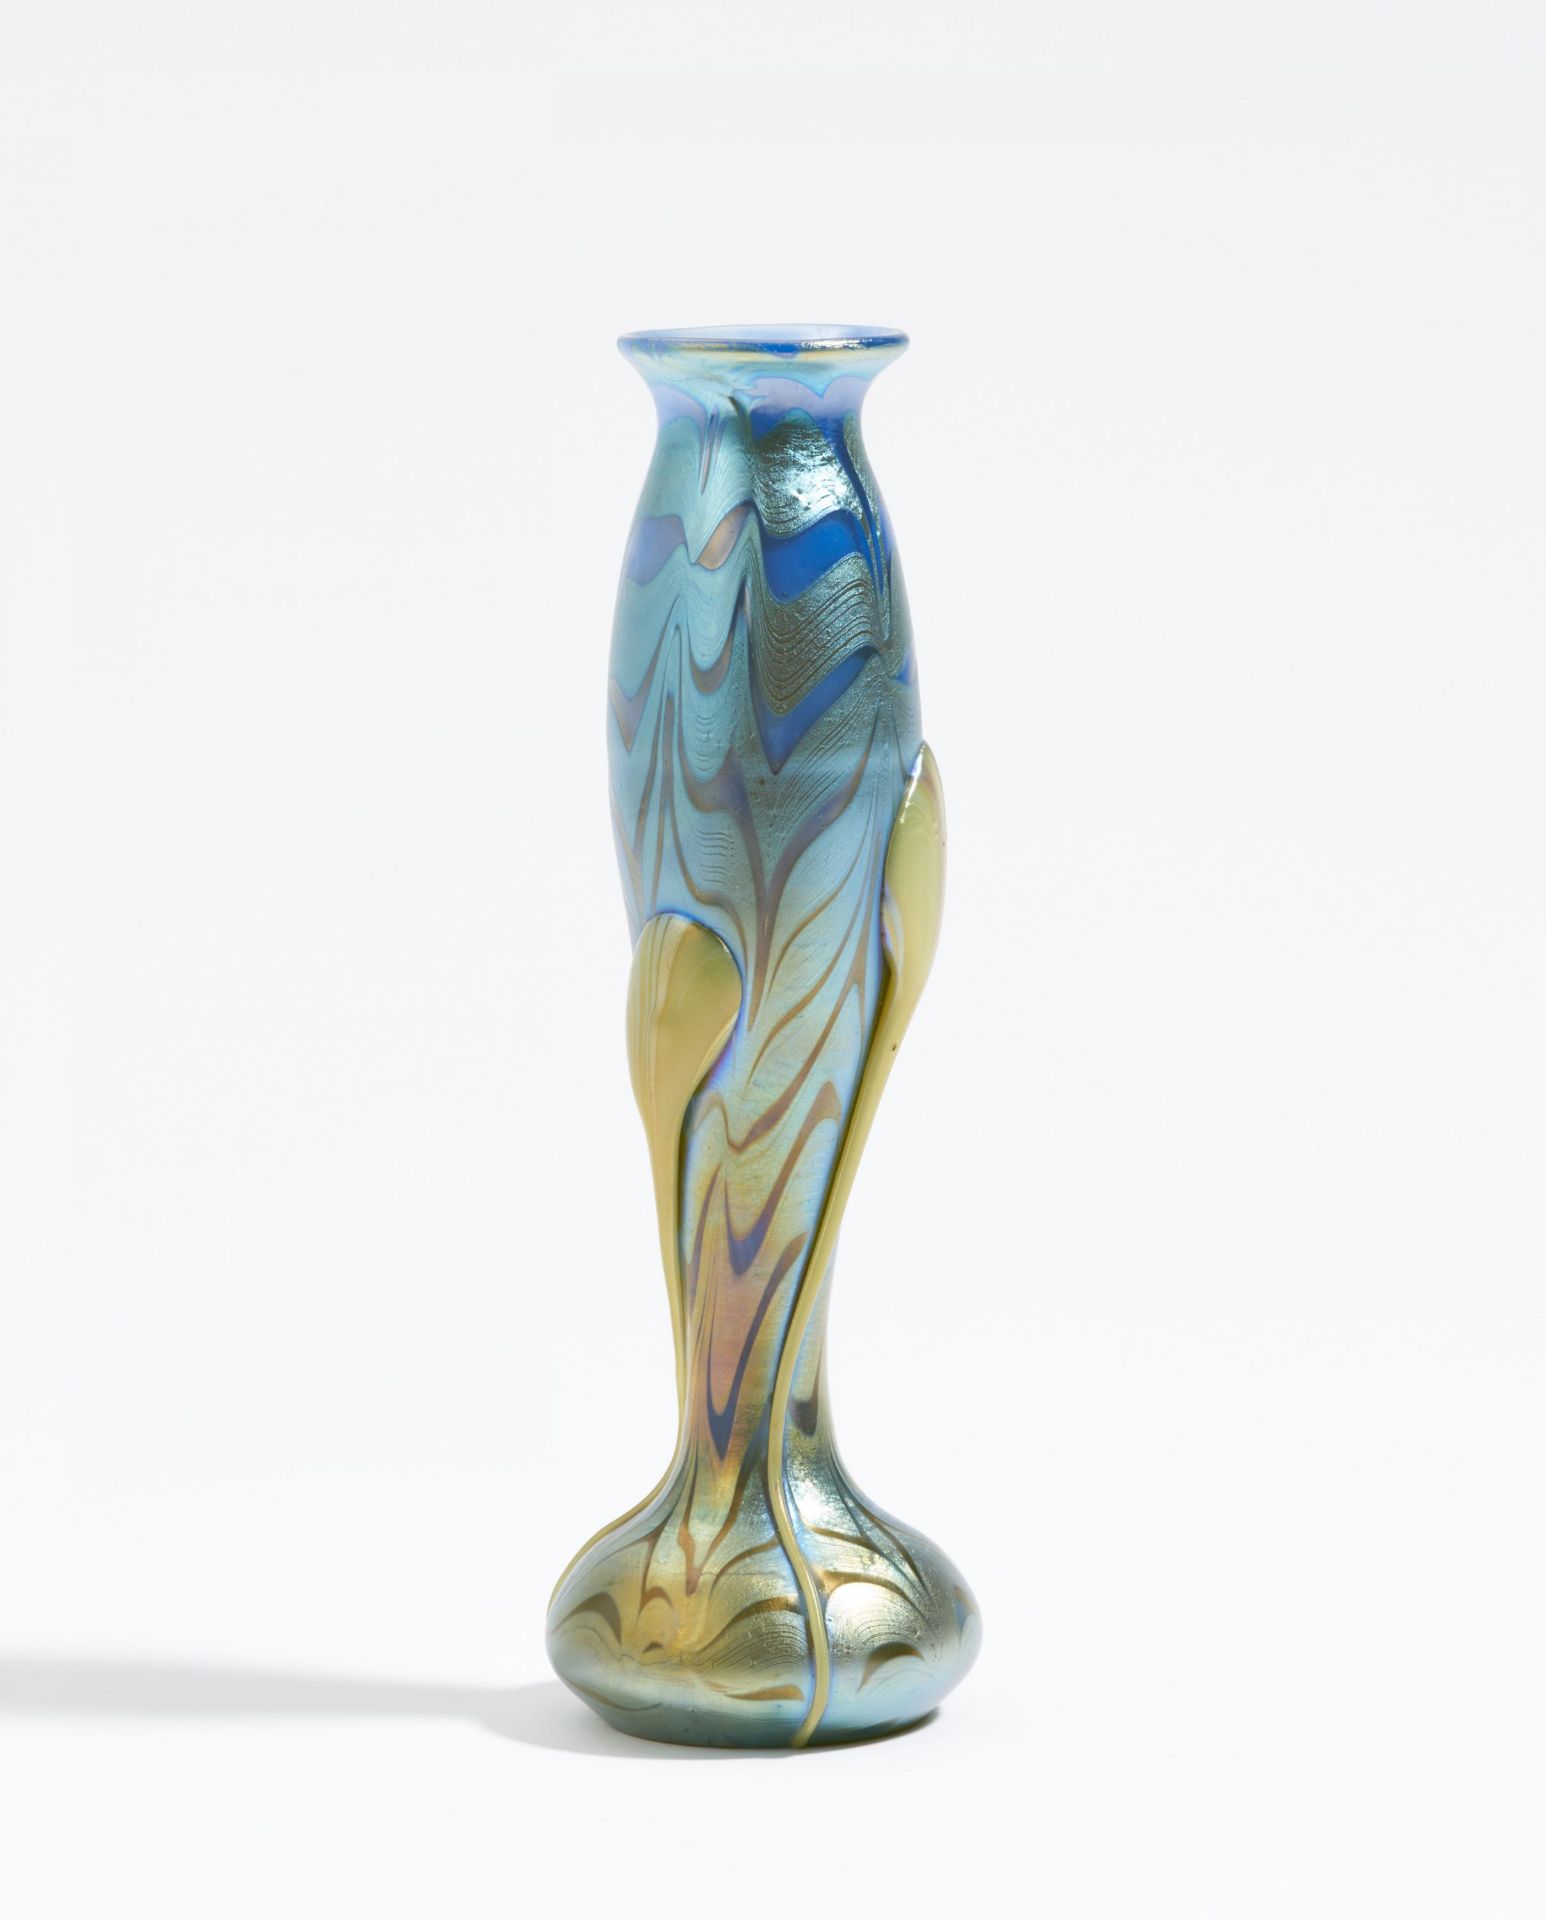 Small club-shaped vase "Phänomen" - Image 2 of 6